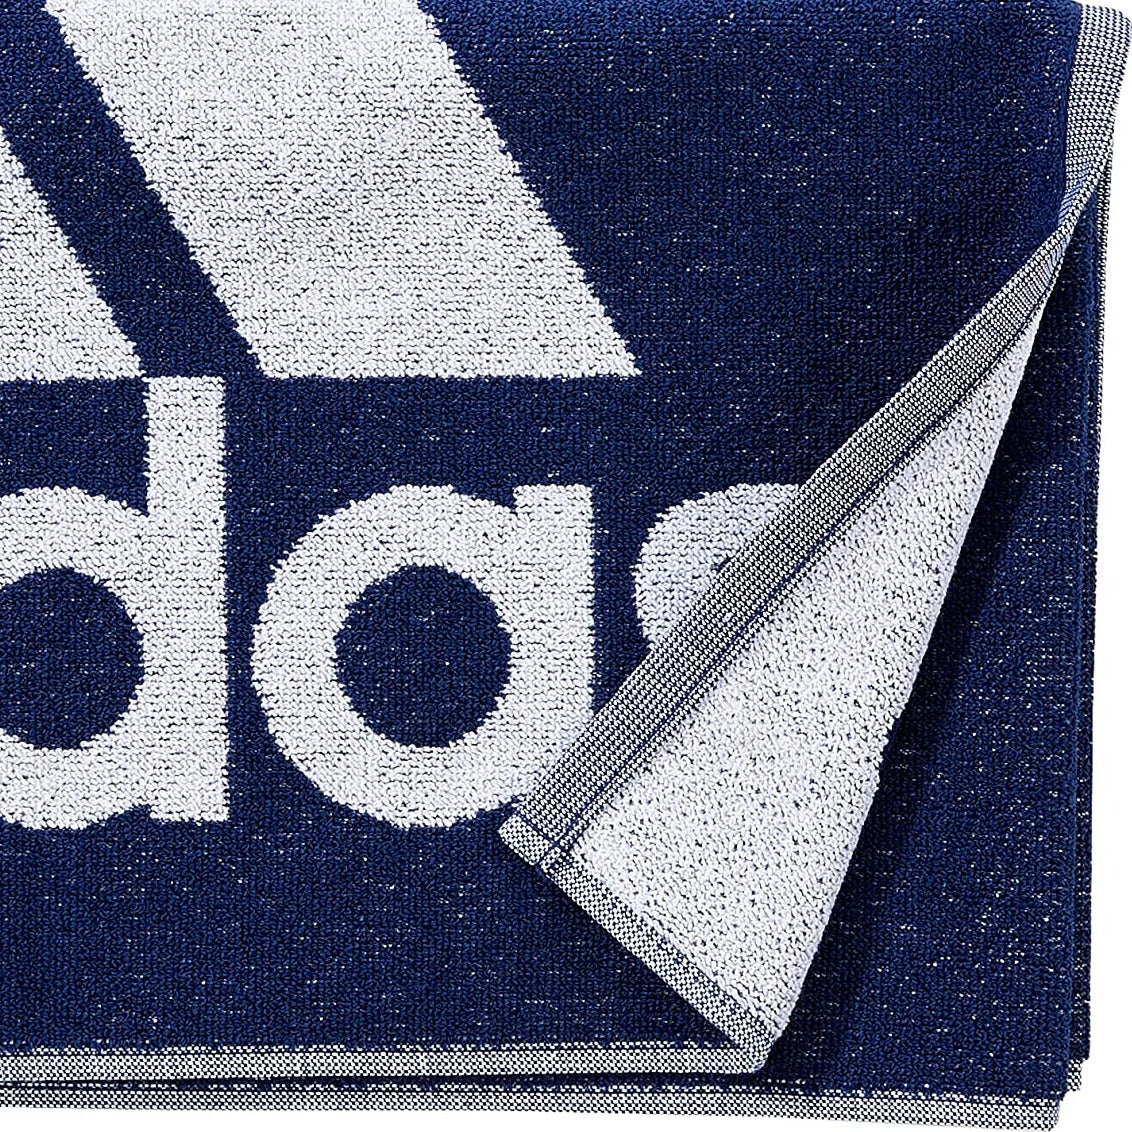 Adidas Adult Unisex Gym Towel Small 50 x 100cm - Navy Blue/White